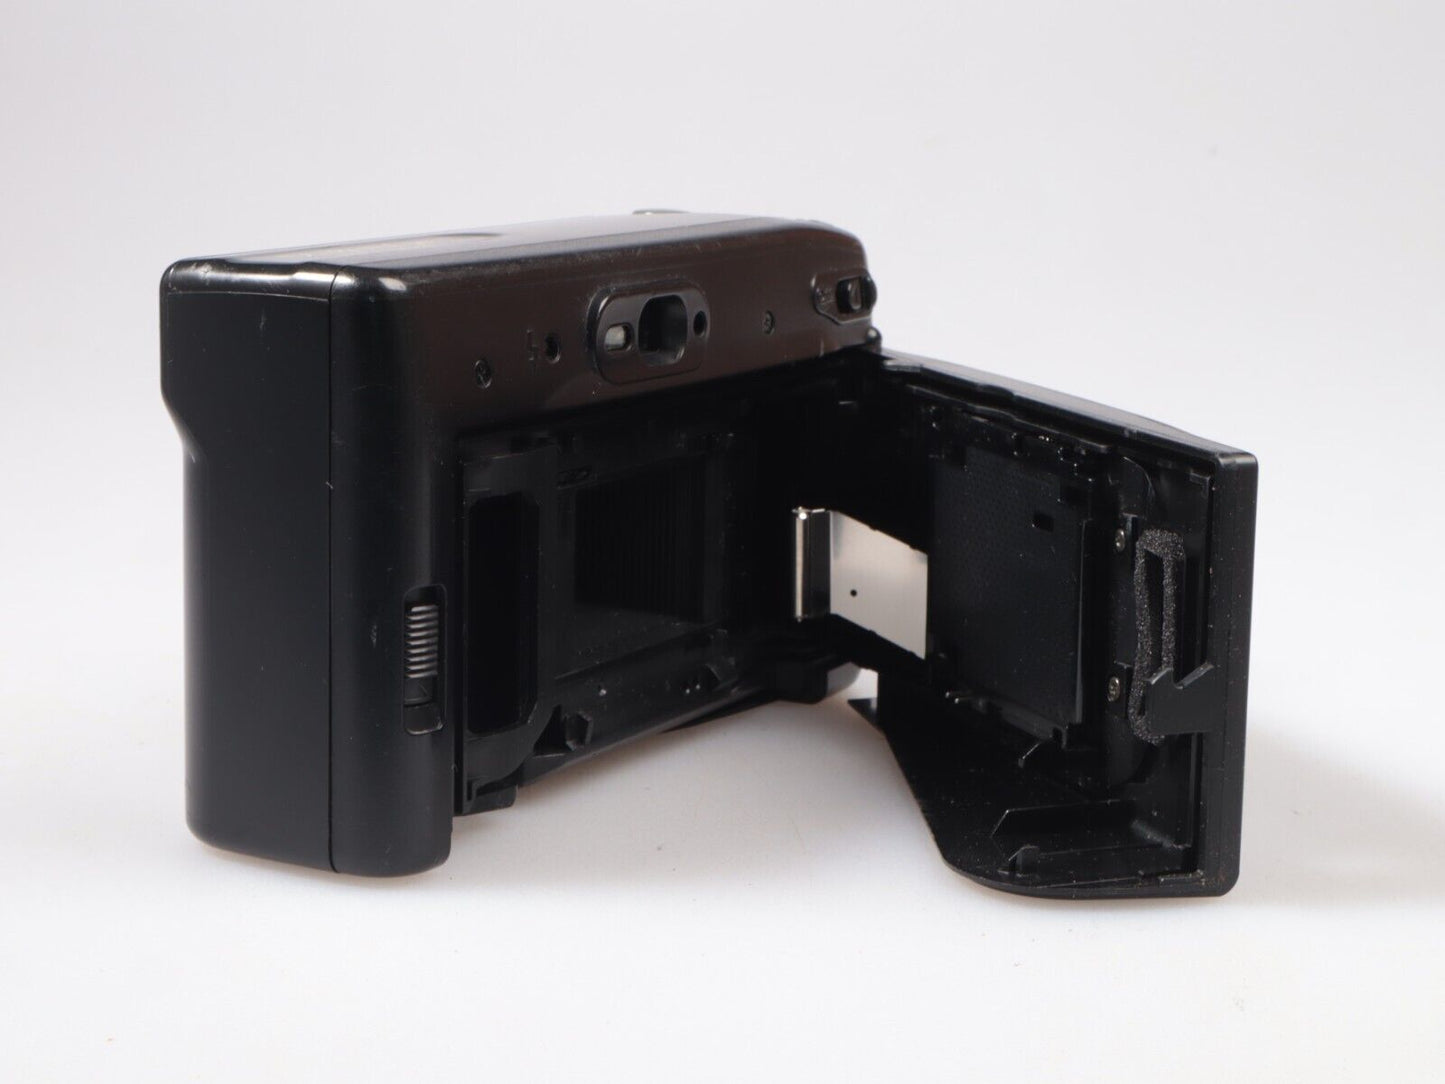 Fuji DL-180 Tele DATE | 35mm Point and shoot Film Camera | Black